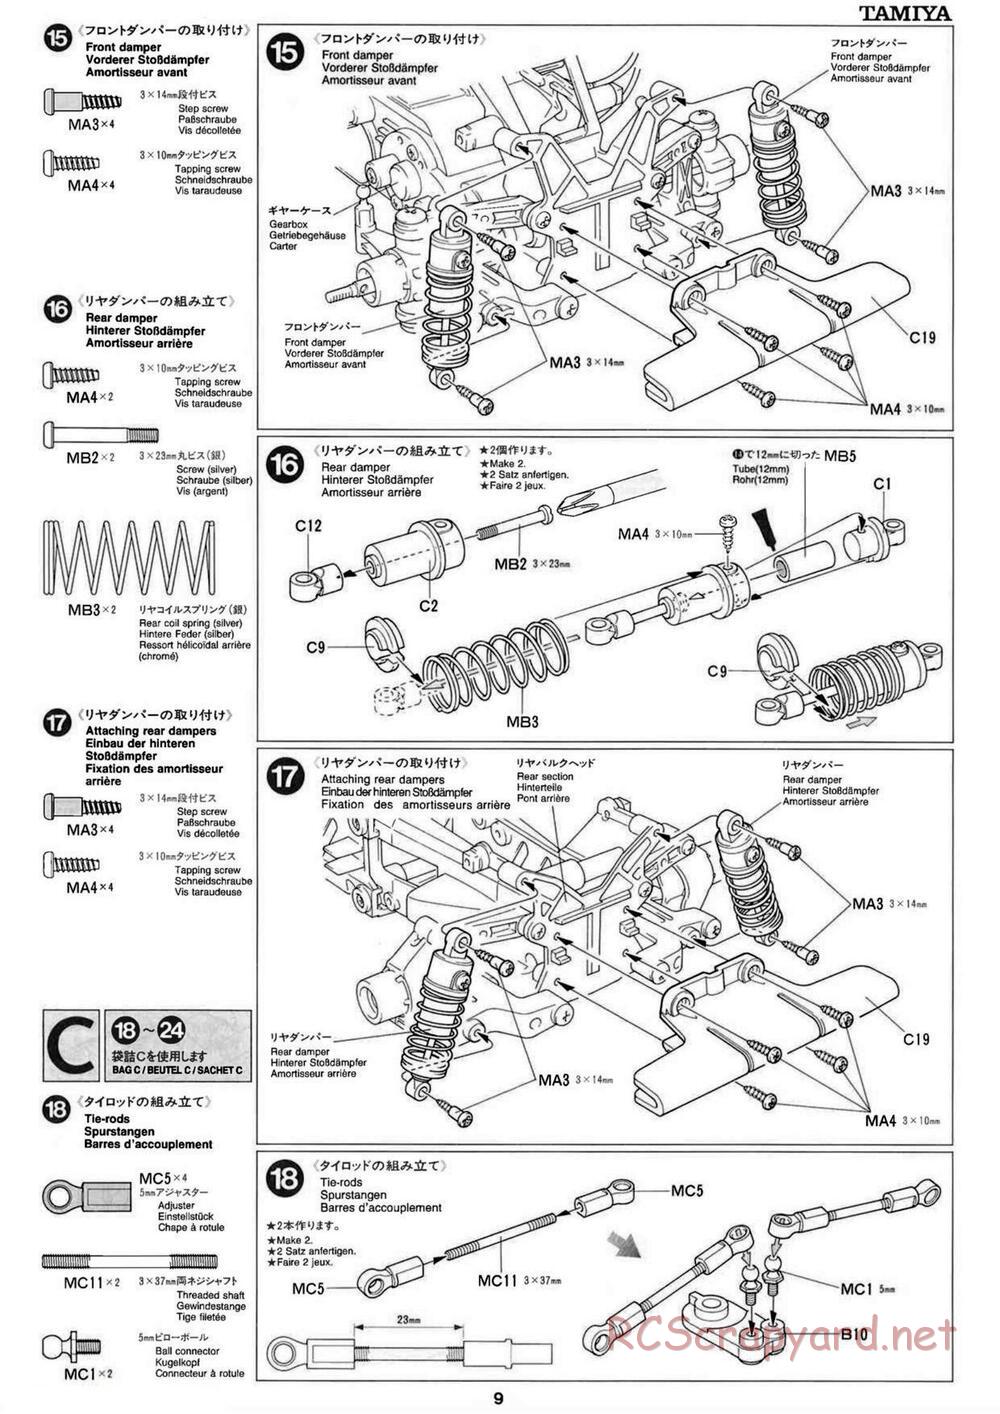 Tamiya - FF-02 Chassis - Manual - Page 9